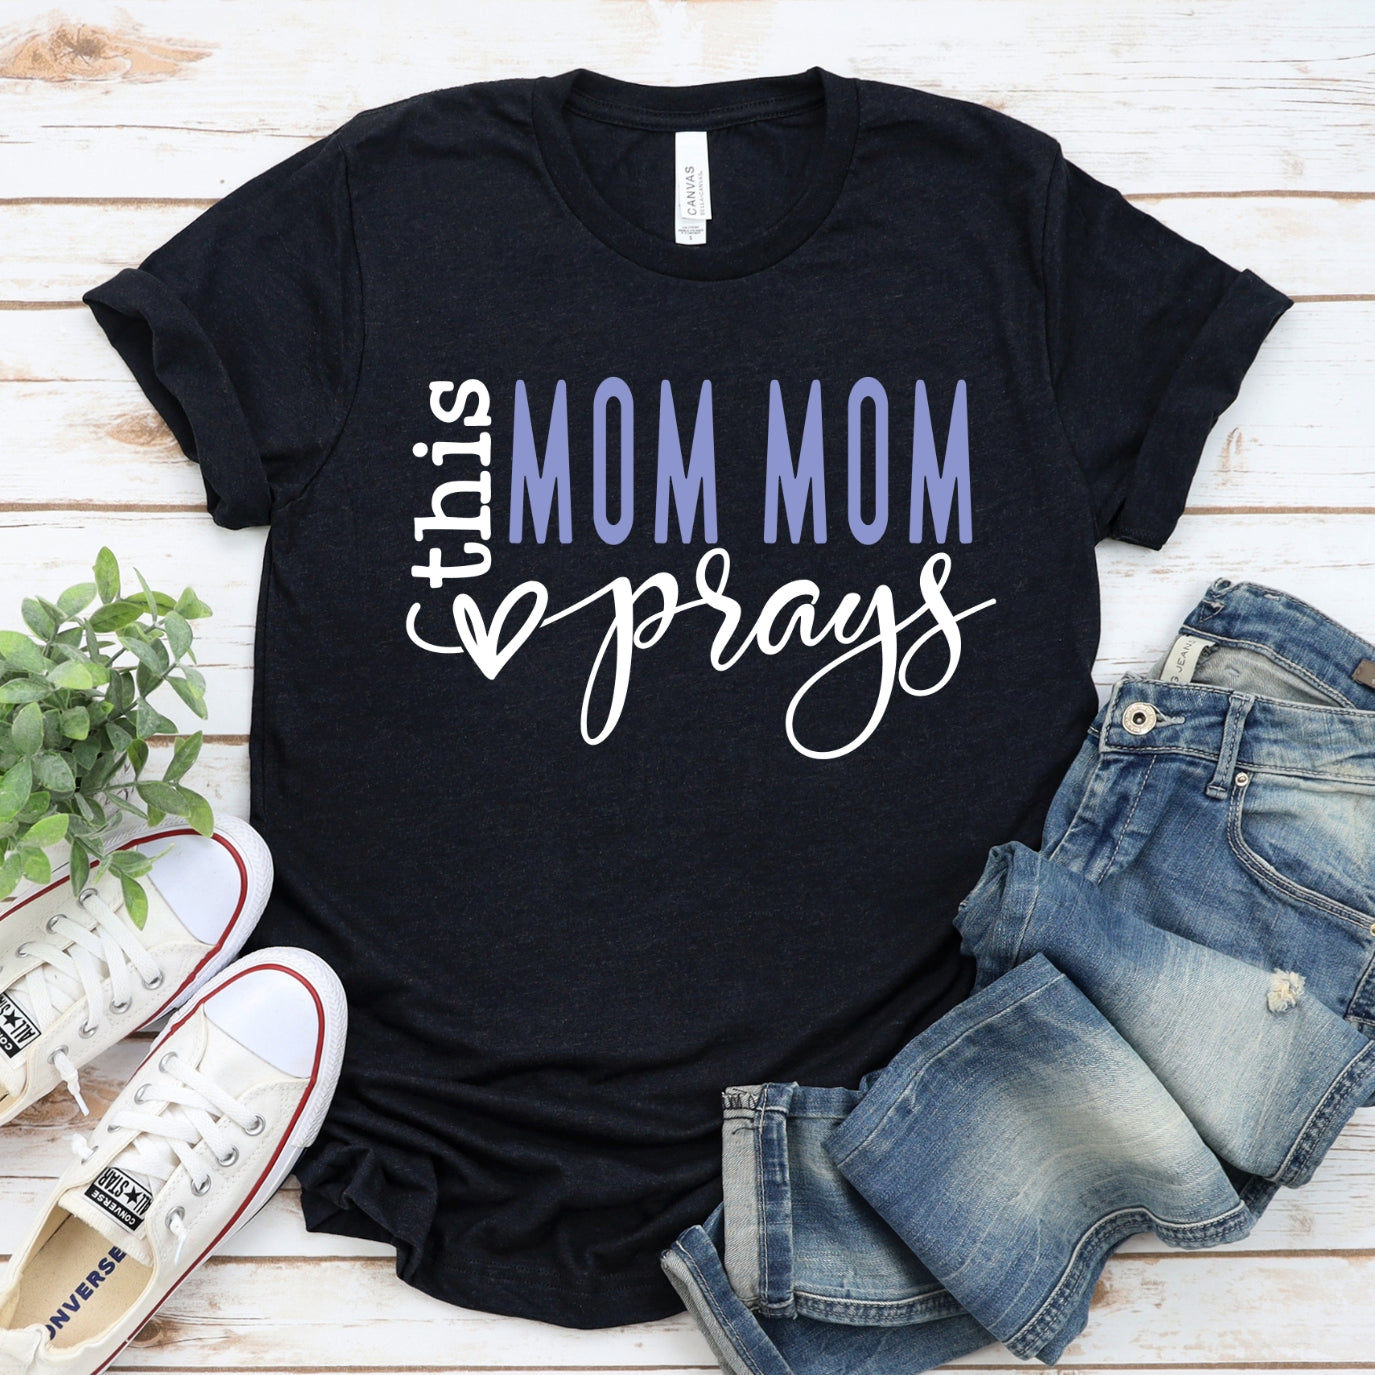 This Mom Mom Prays Women's T-Shirt